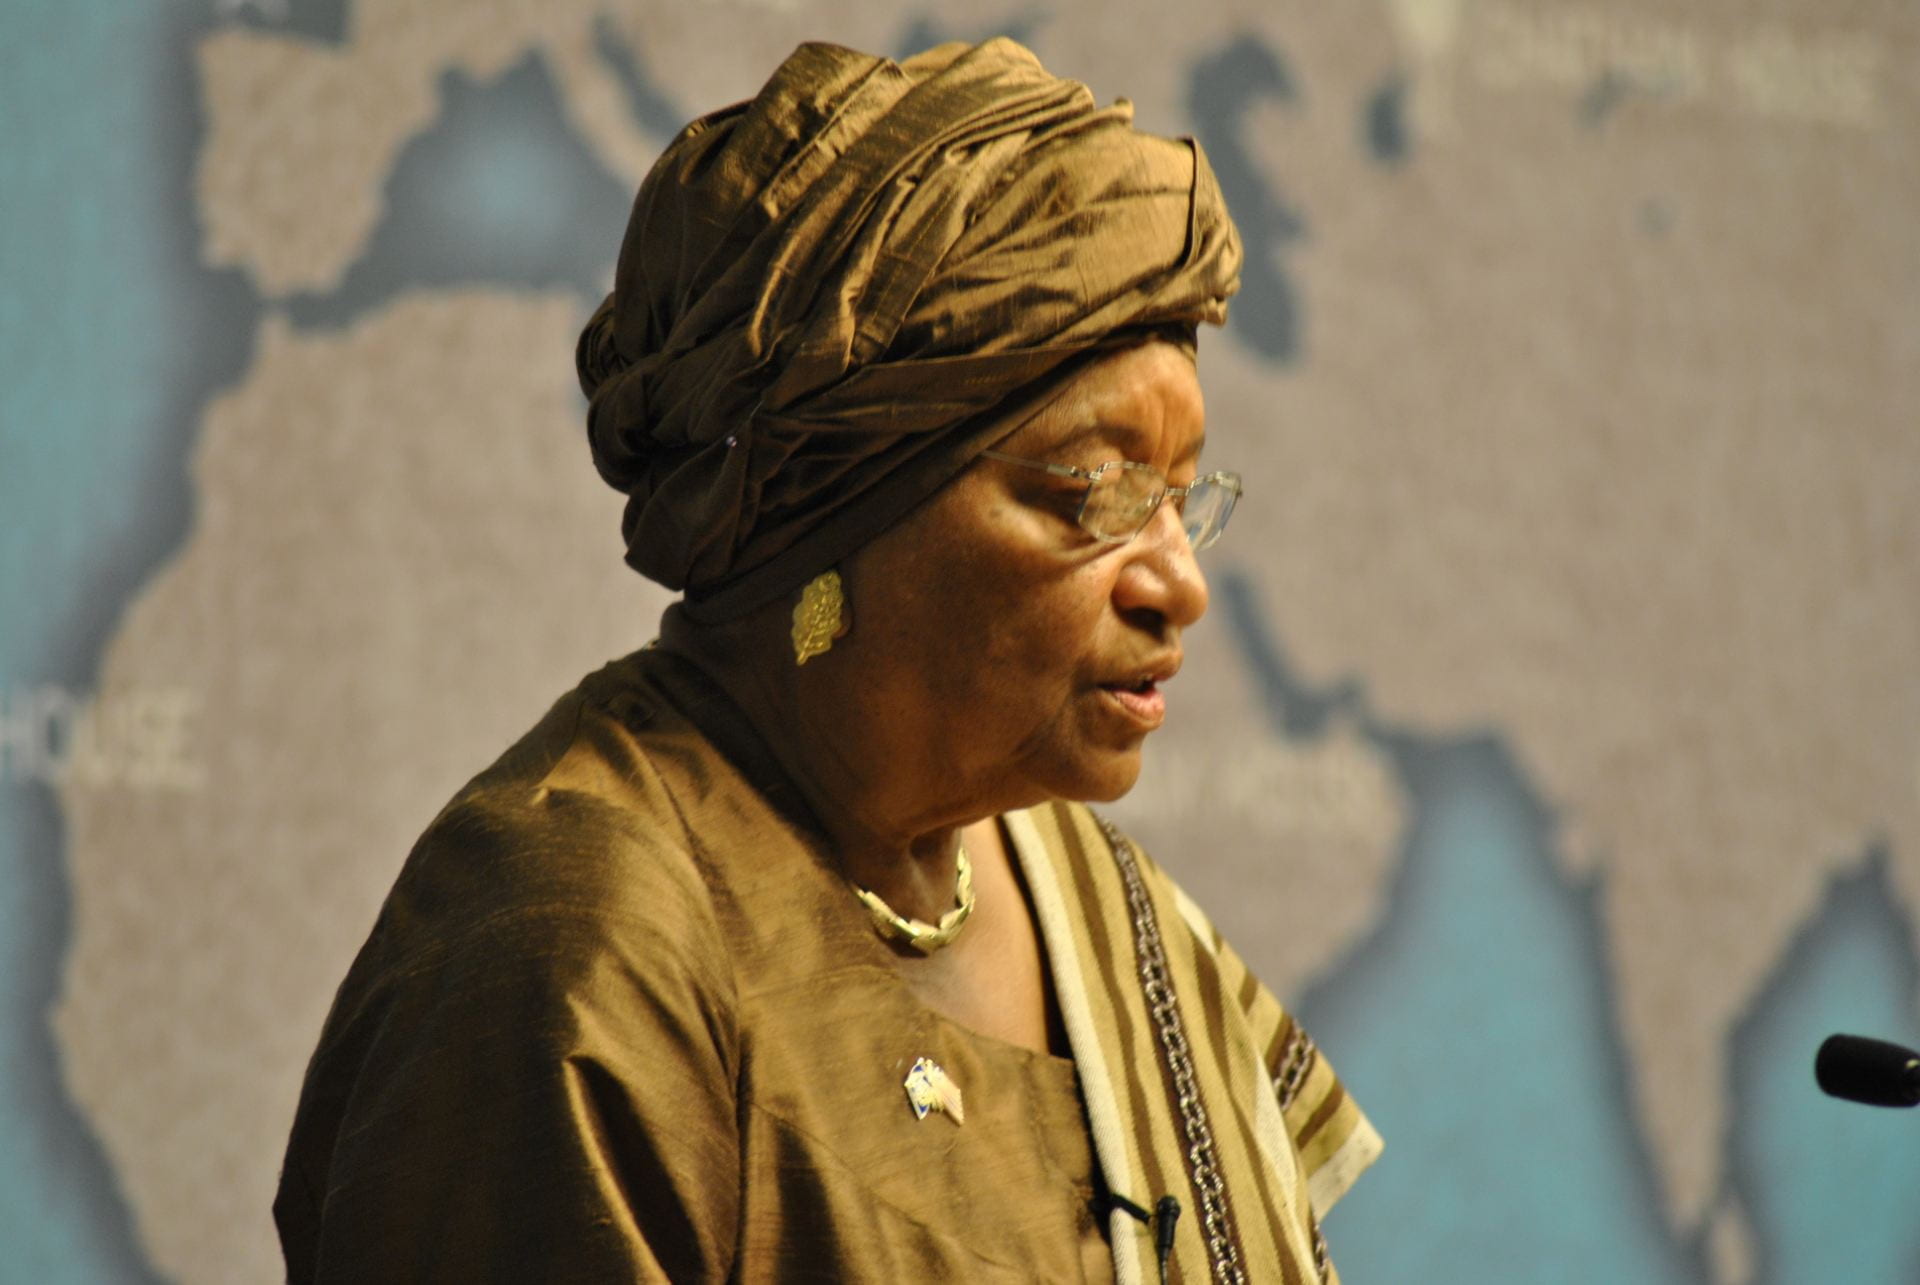 The President of Liberia, HE Ellen Johnson Sirleaf. Source: Chatham House, Creative Commons